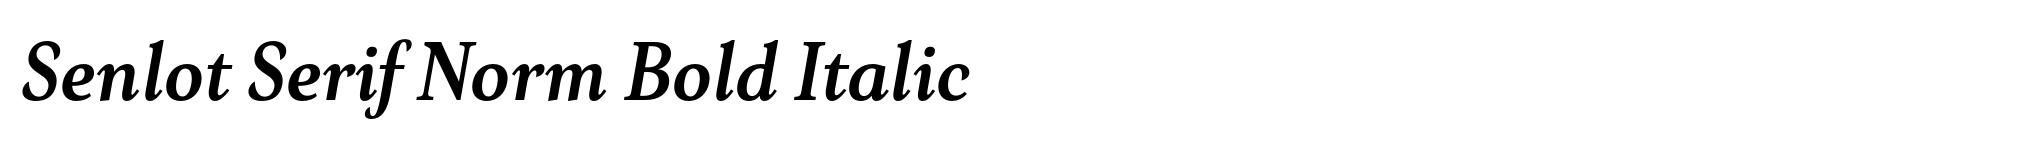 Senlot Serif Norm Bold Italic image